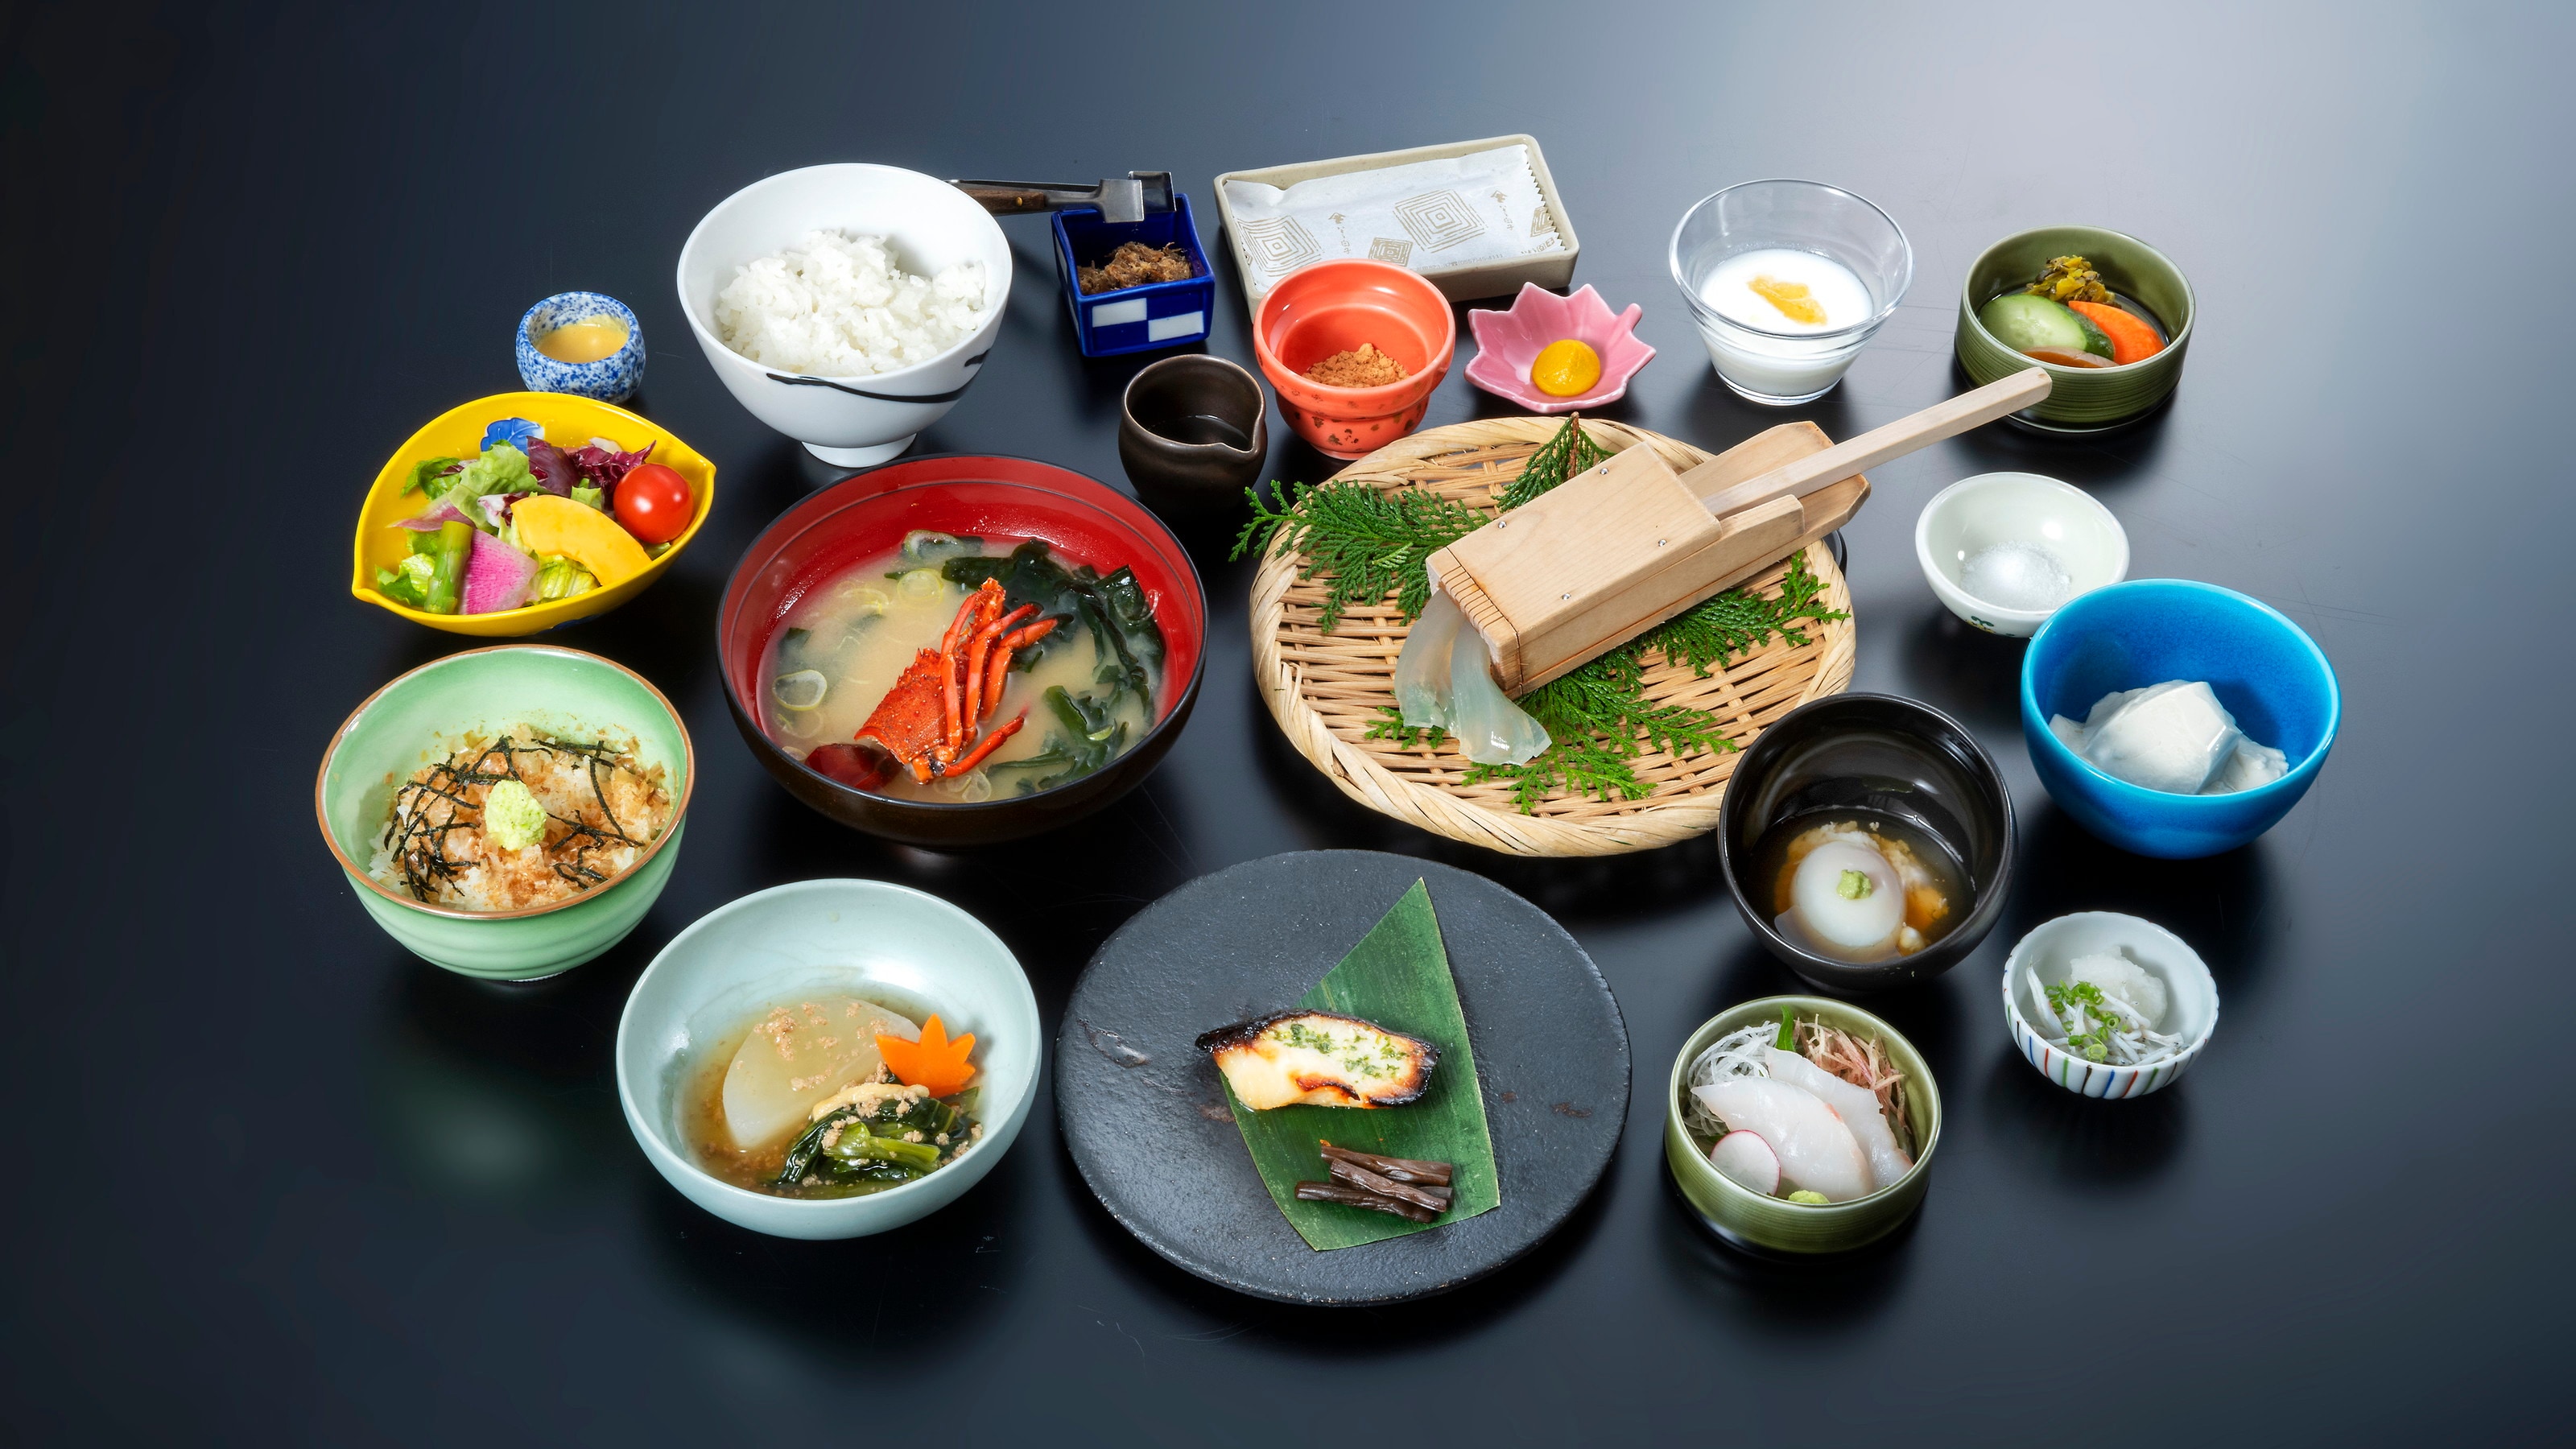 [Breakfast] Includes tokoroten, wasabi bowl, and homemade tofu. Homemade golden sea bream furikake is the most popular